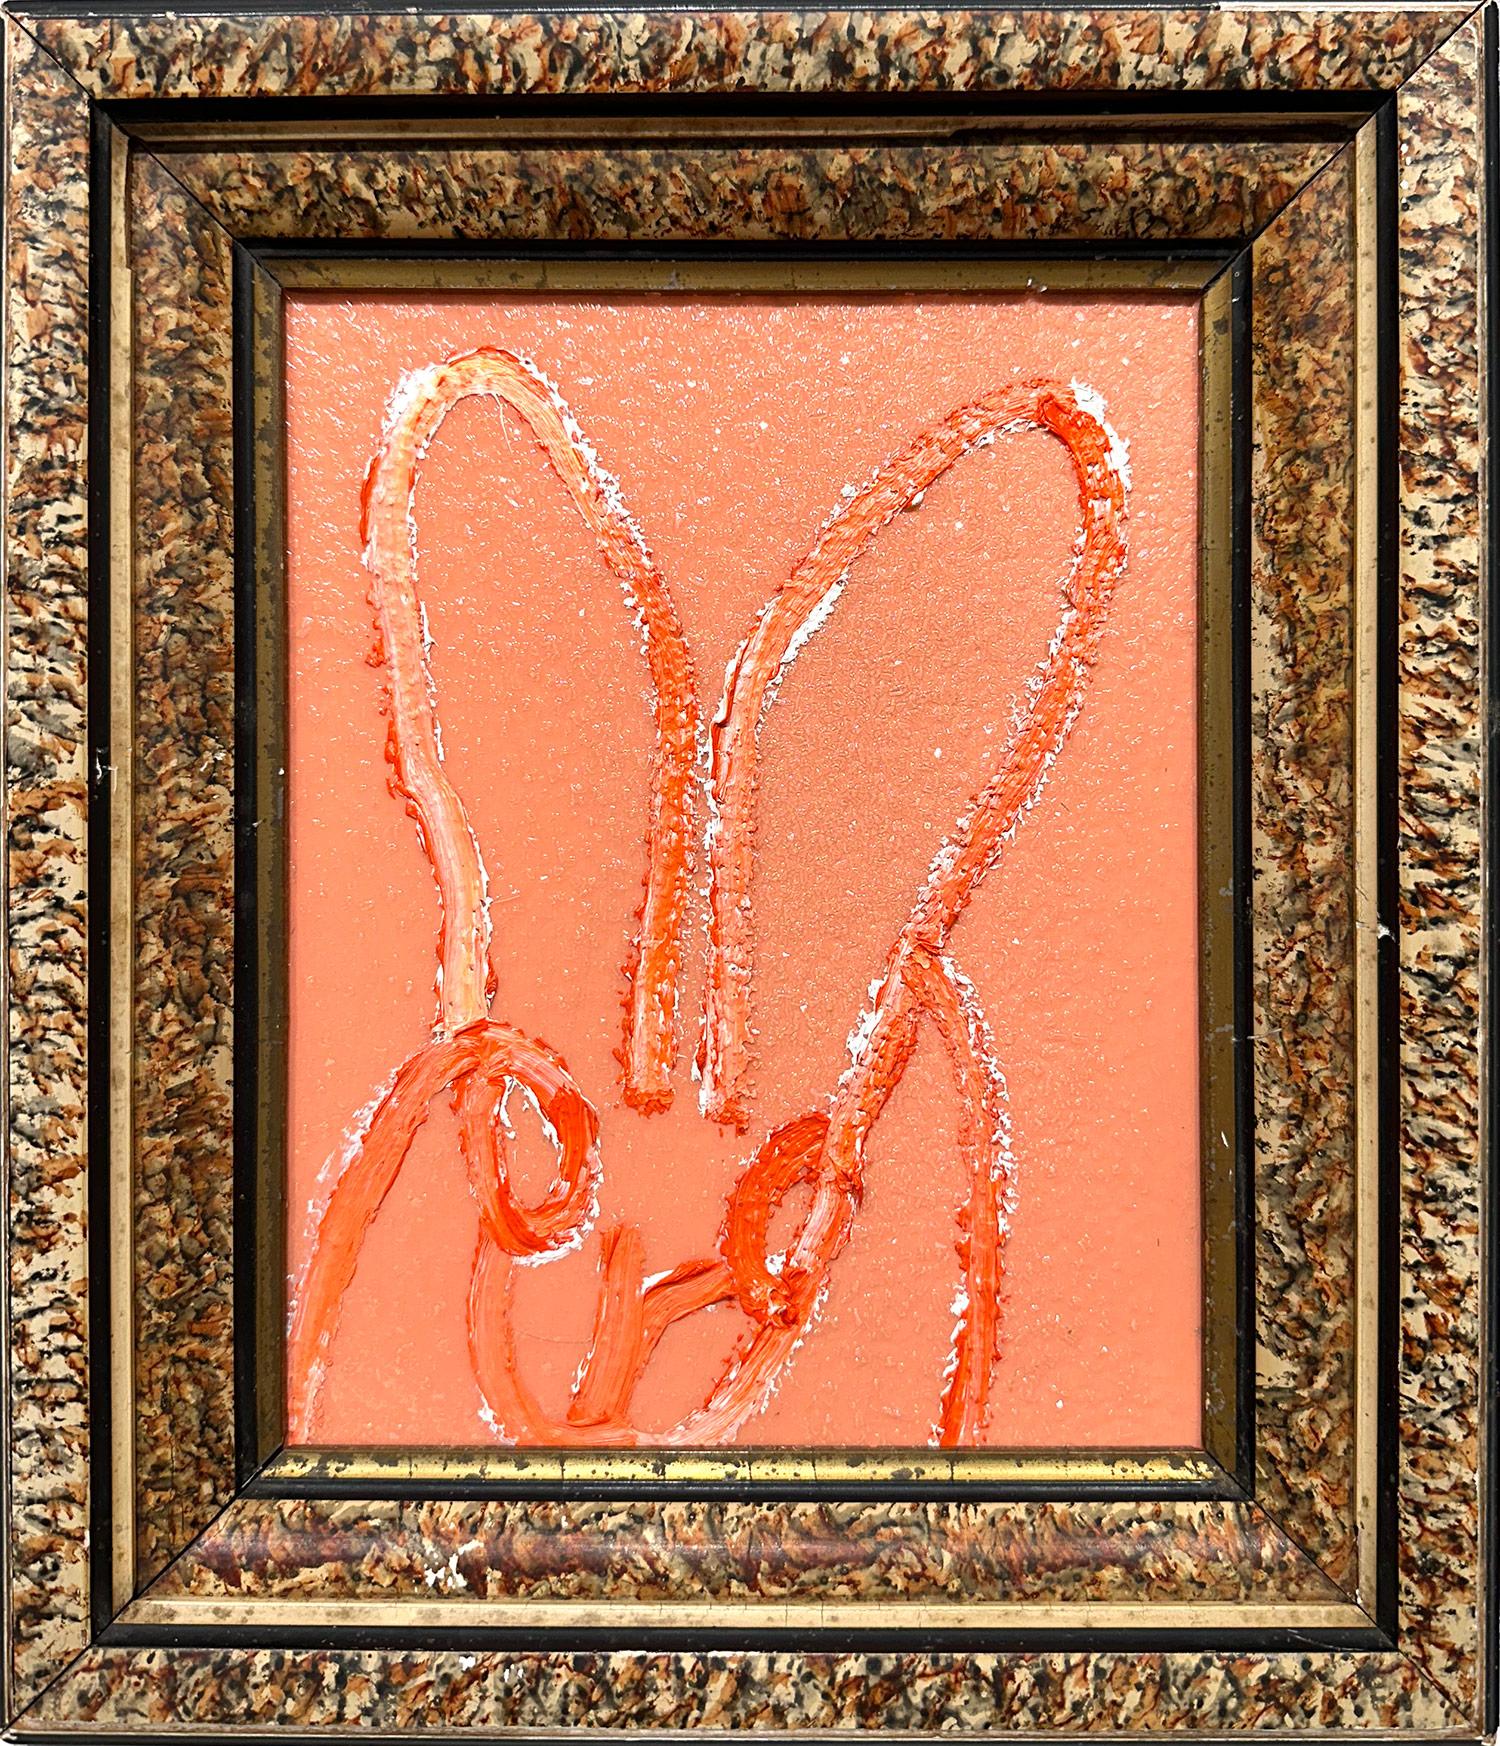 Hunt Slonem Abstract Painting - "Mellon" Bunny on Holland Tulip Orange Oil Painting on Wood Panel w Diamond Dust